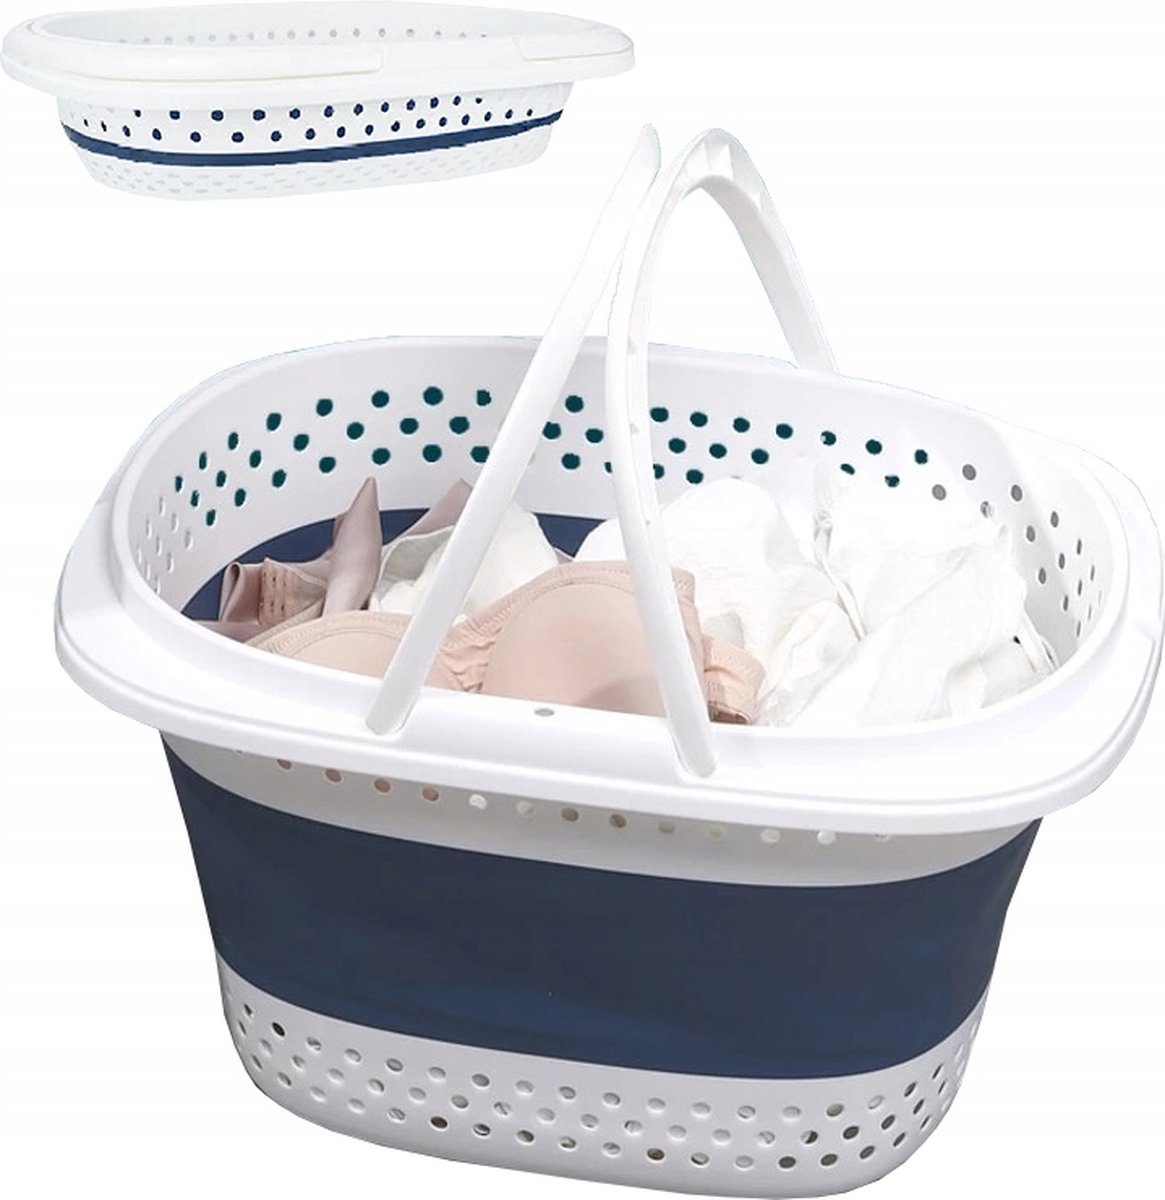 Opvouwbare Wasmand - Multifunctionele Wasmand Siliconen - Ruimtebesparende Wasemmer - Wasmand Opvouwbaar - Wasmanden - Wasbox - Laundry - Inklapbare Wasmand - Mand - Foldable Wash Basket - 32 L